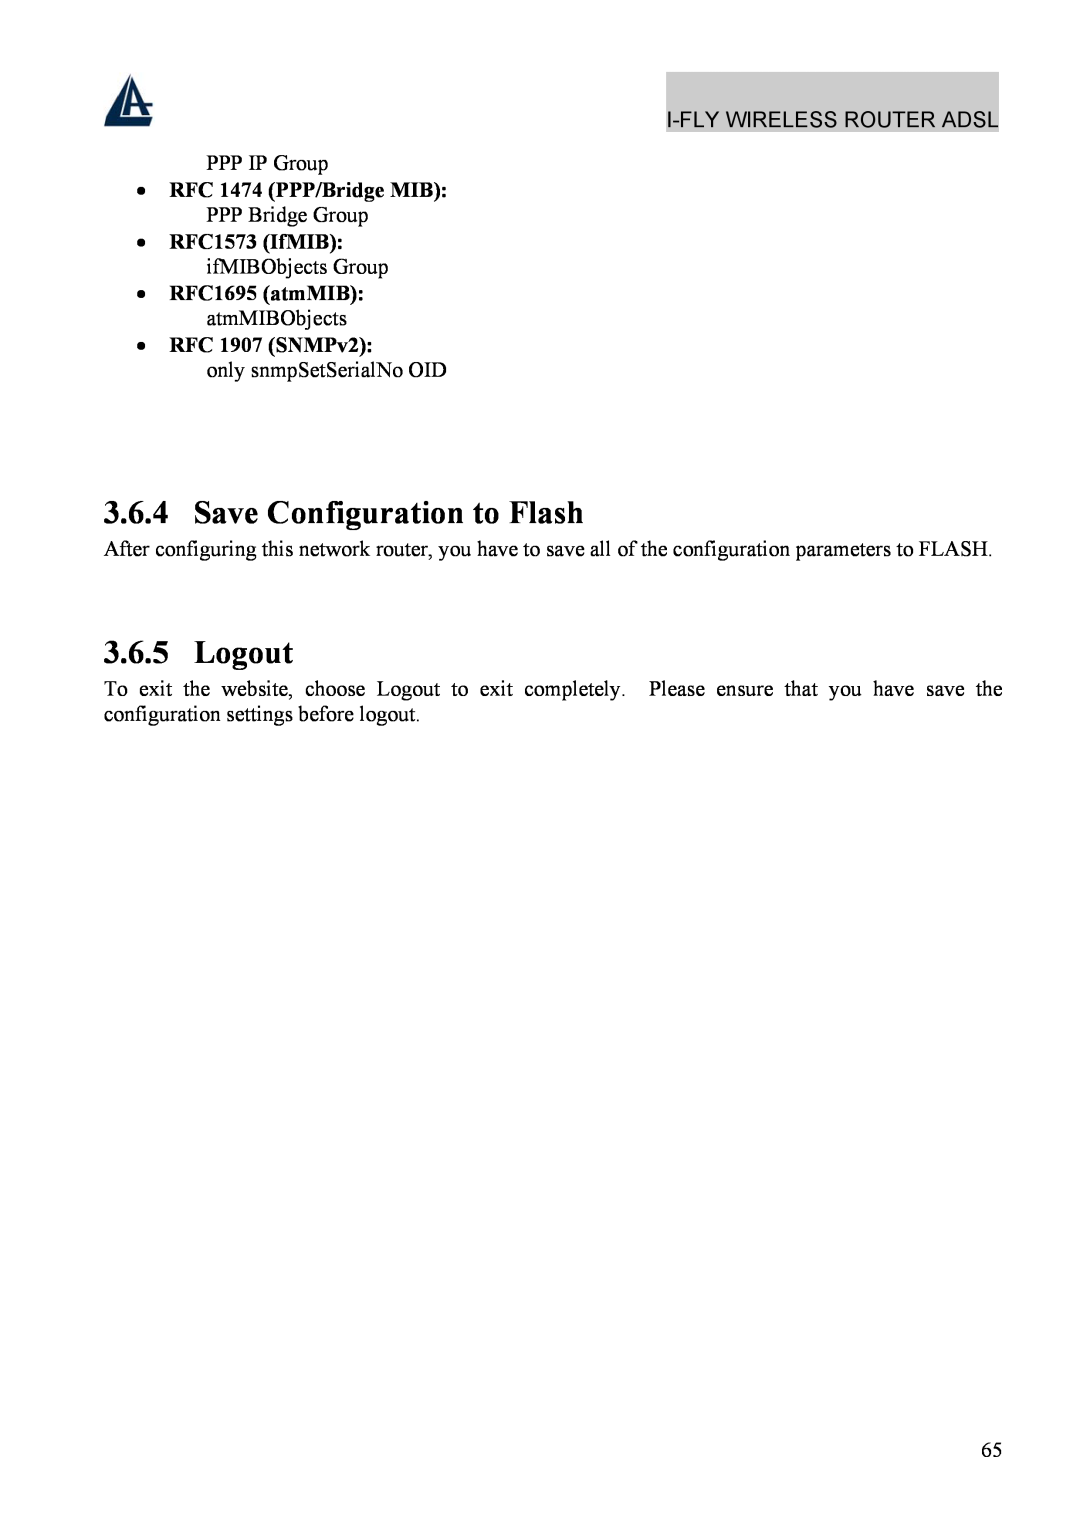 Atlantis Land A02-WRA4-54G manual Save Configuration to Flash, Logout, RFC 1474 PPP/Bridge MIB, RFC 1907 SNMPv2 